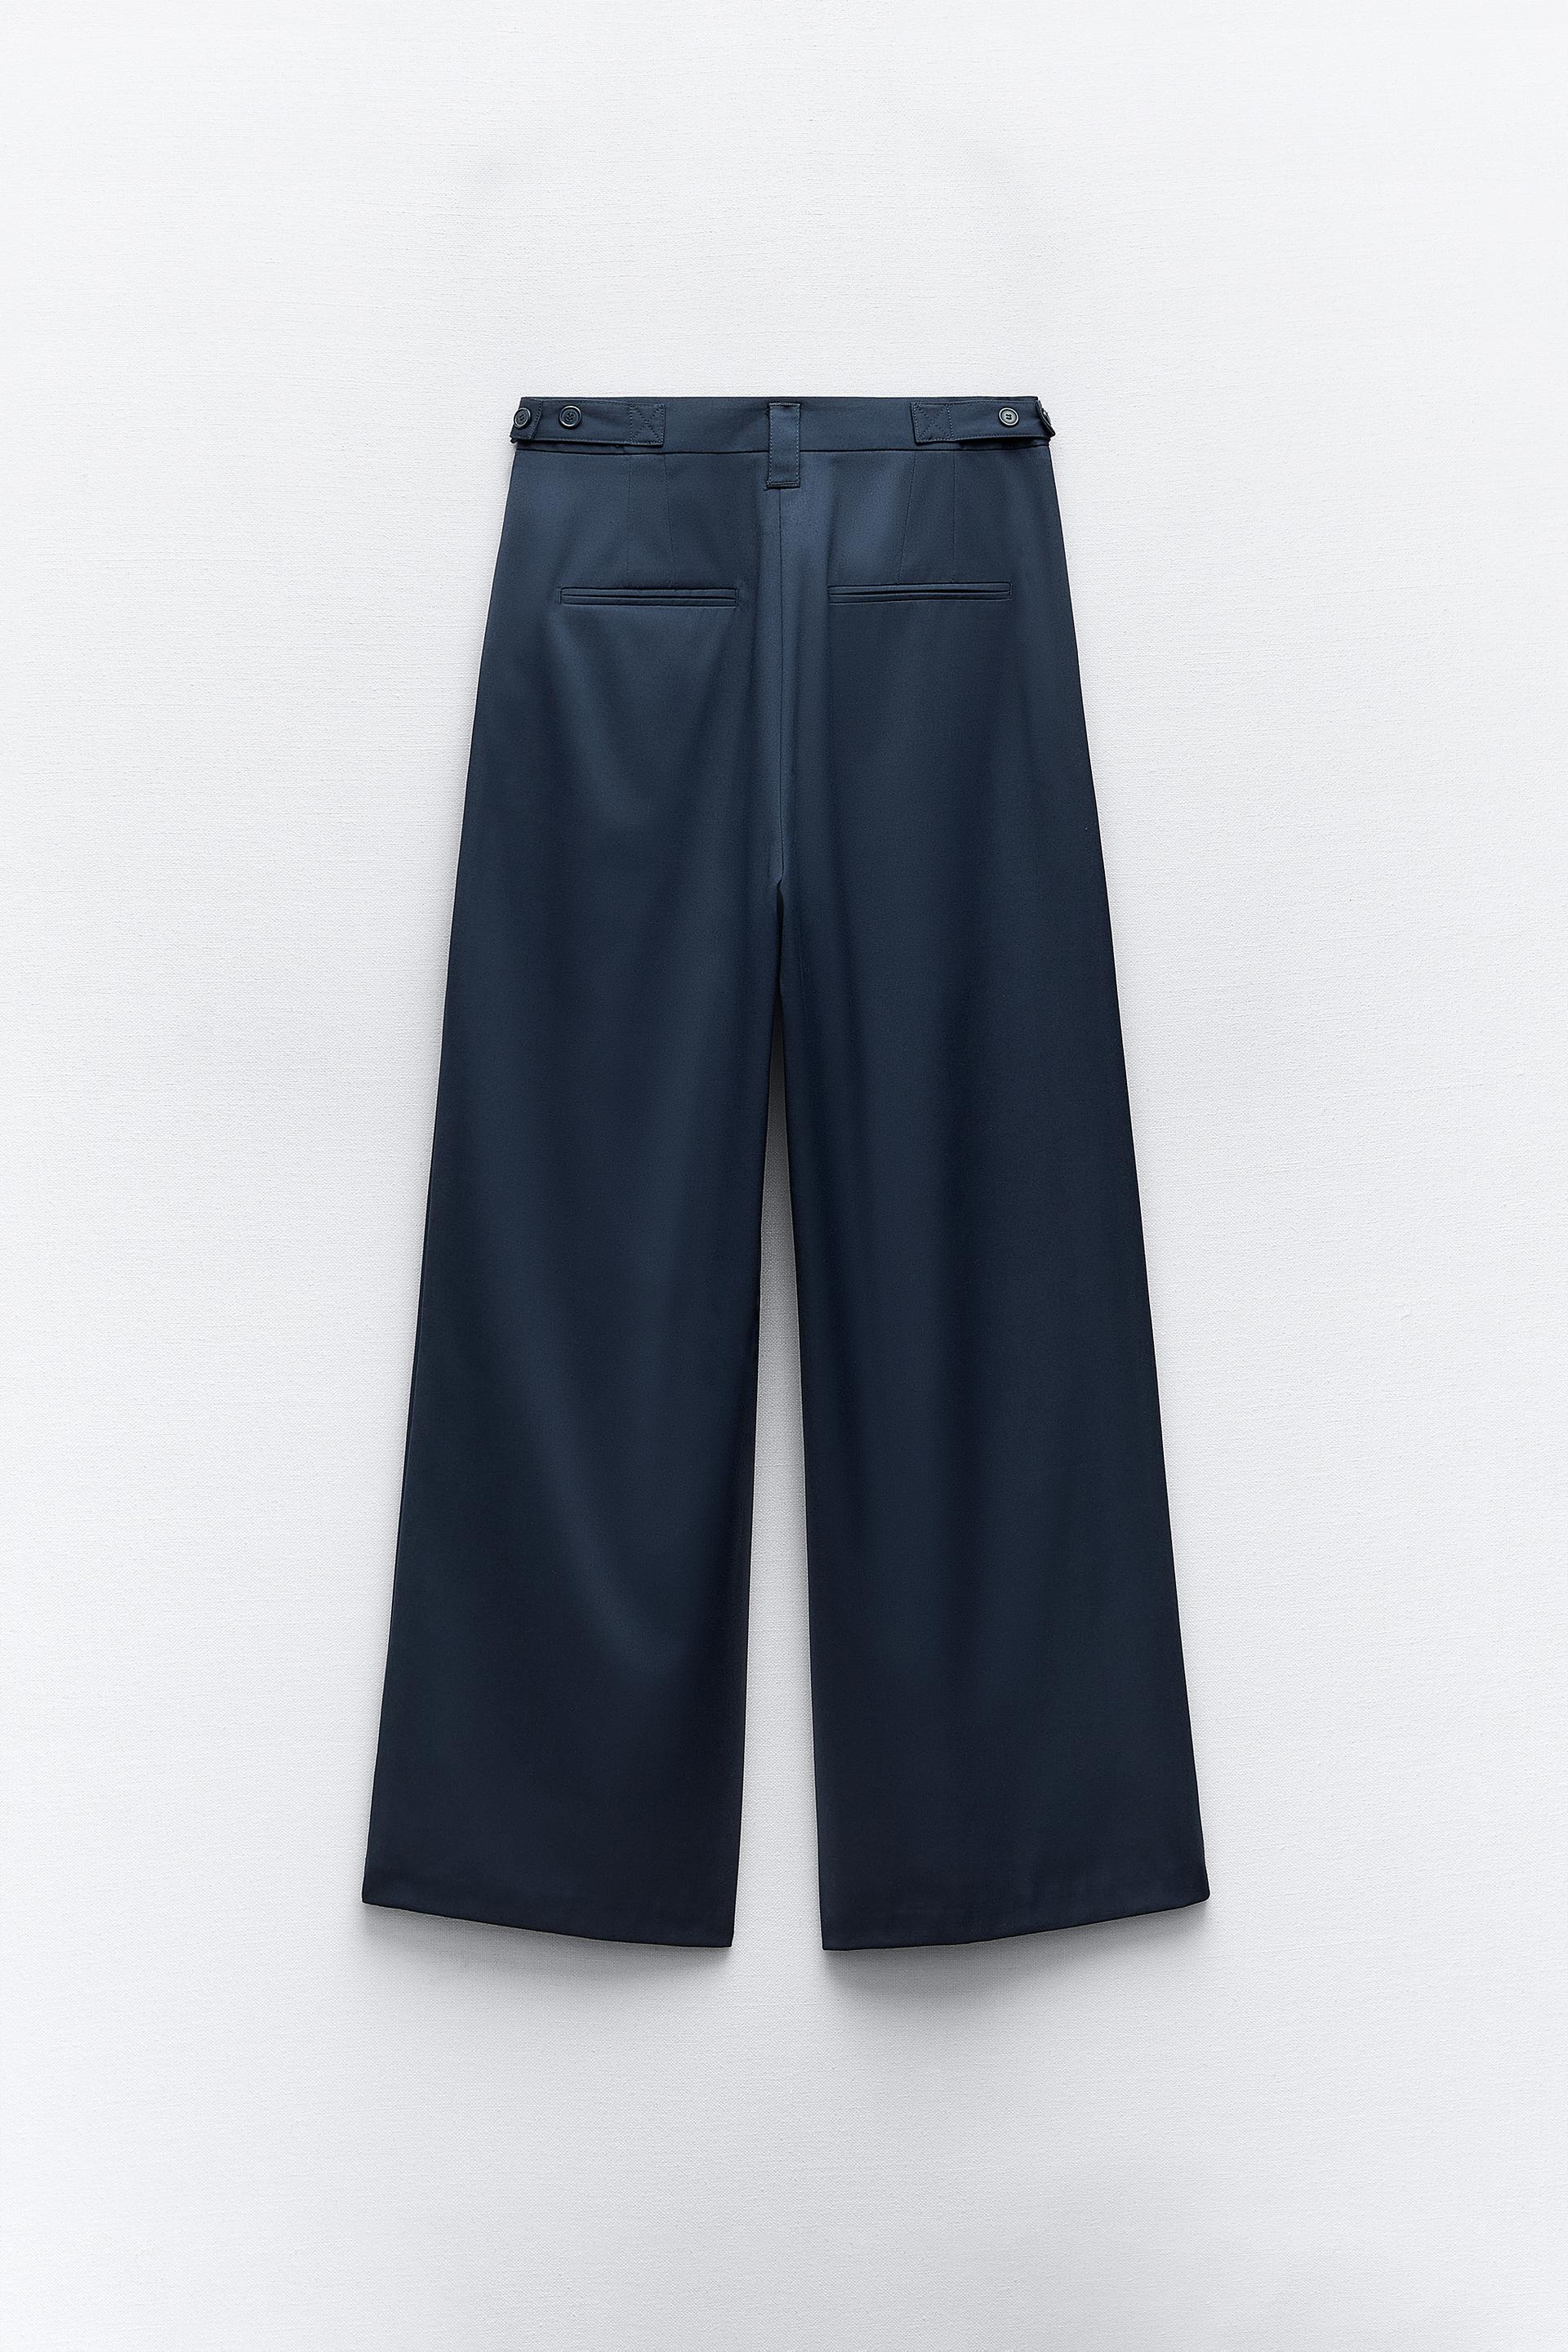 Zara Mens Solid Navy Blue Straight Leg Pants w Belt Loops Cotton Blend Size  30